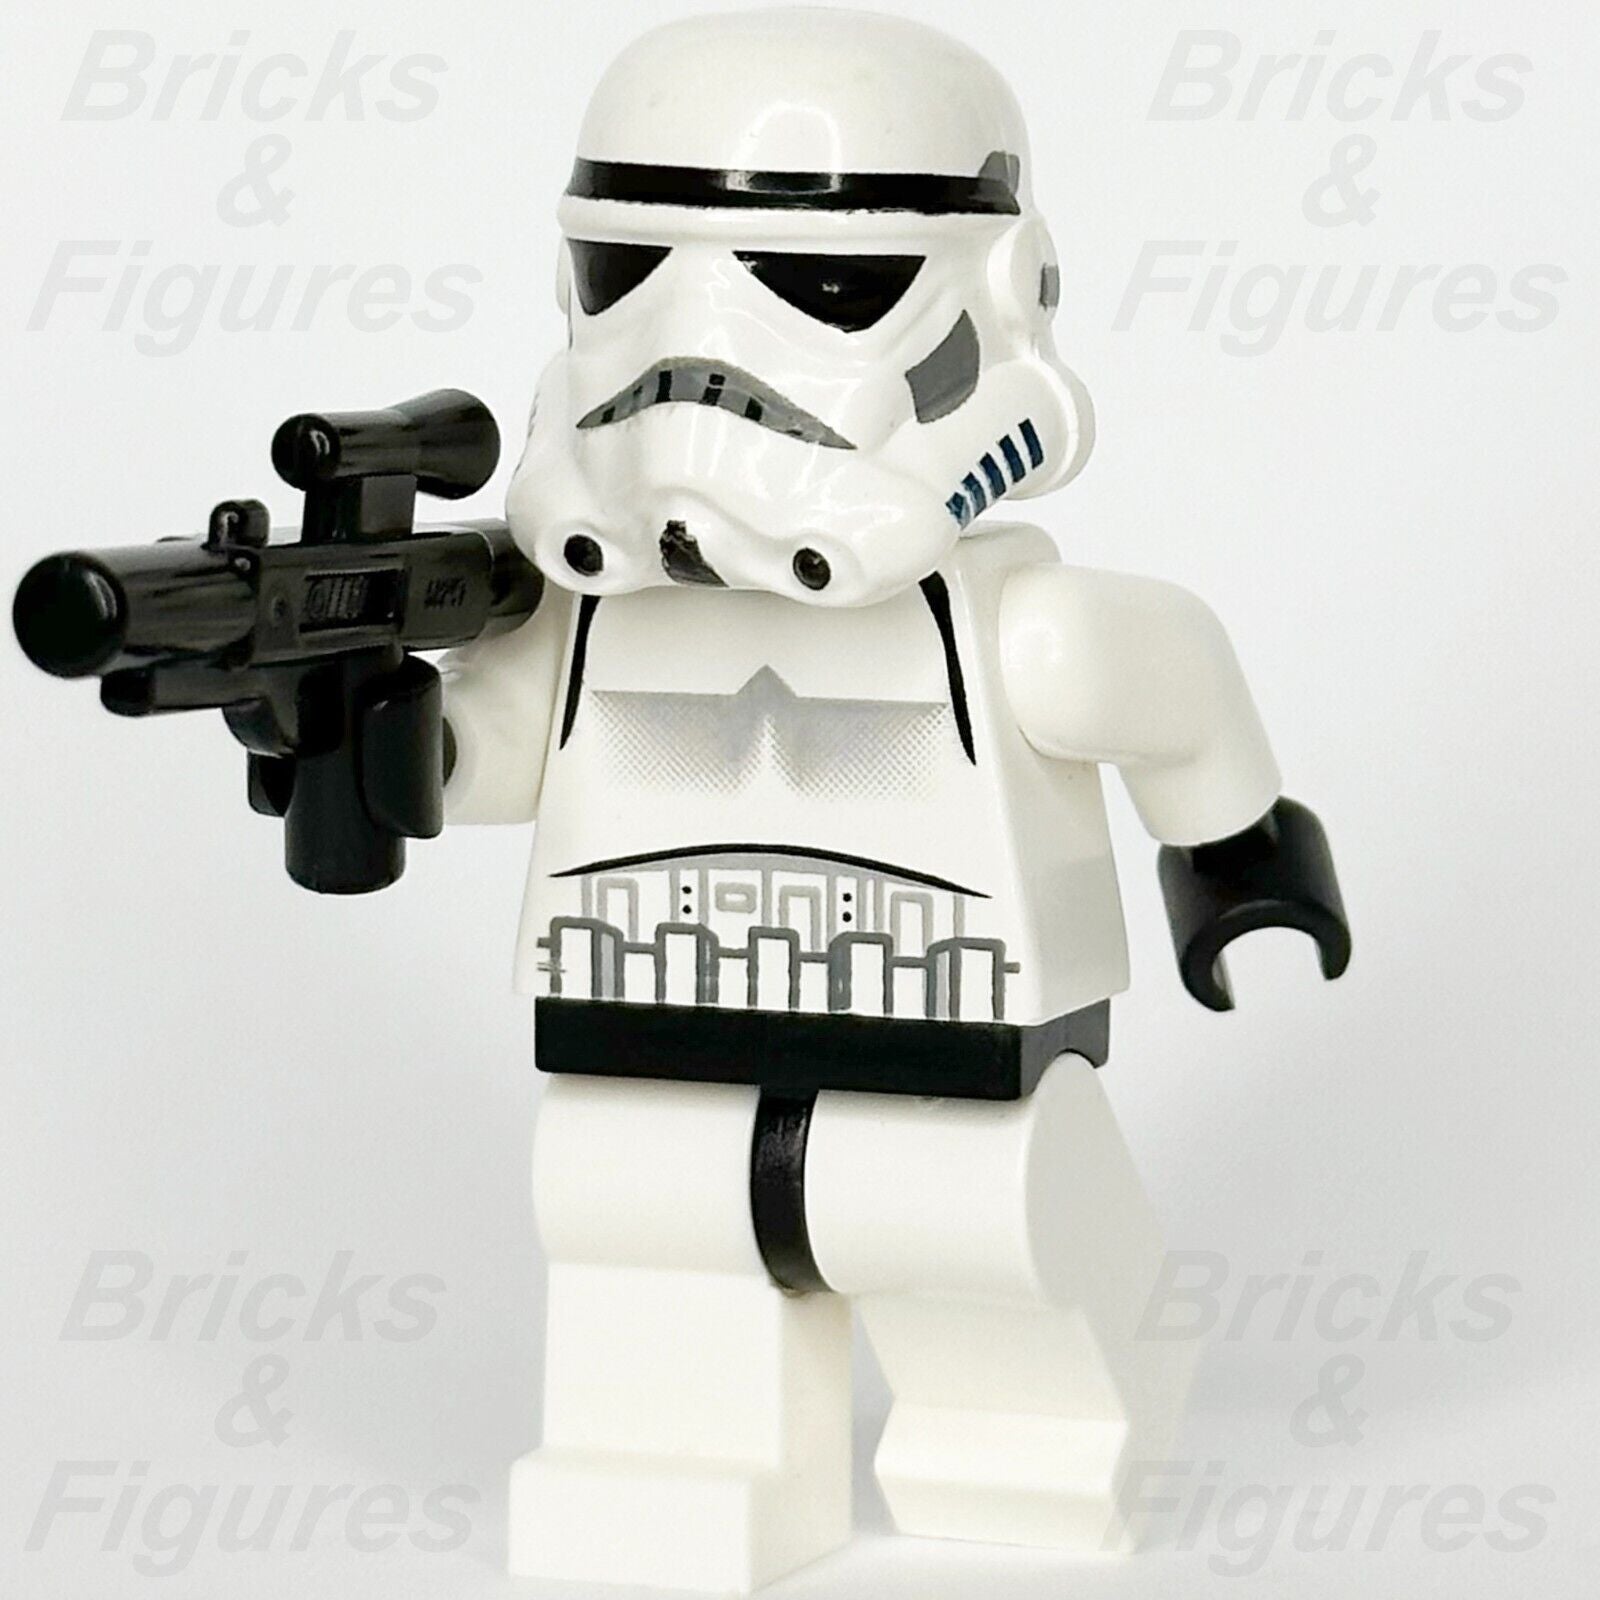 LEGO Star Wars Imperial Stormtrooper Minifigure Legends 7667 10188 10212 8087